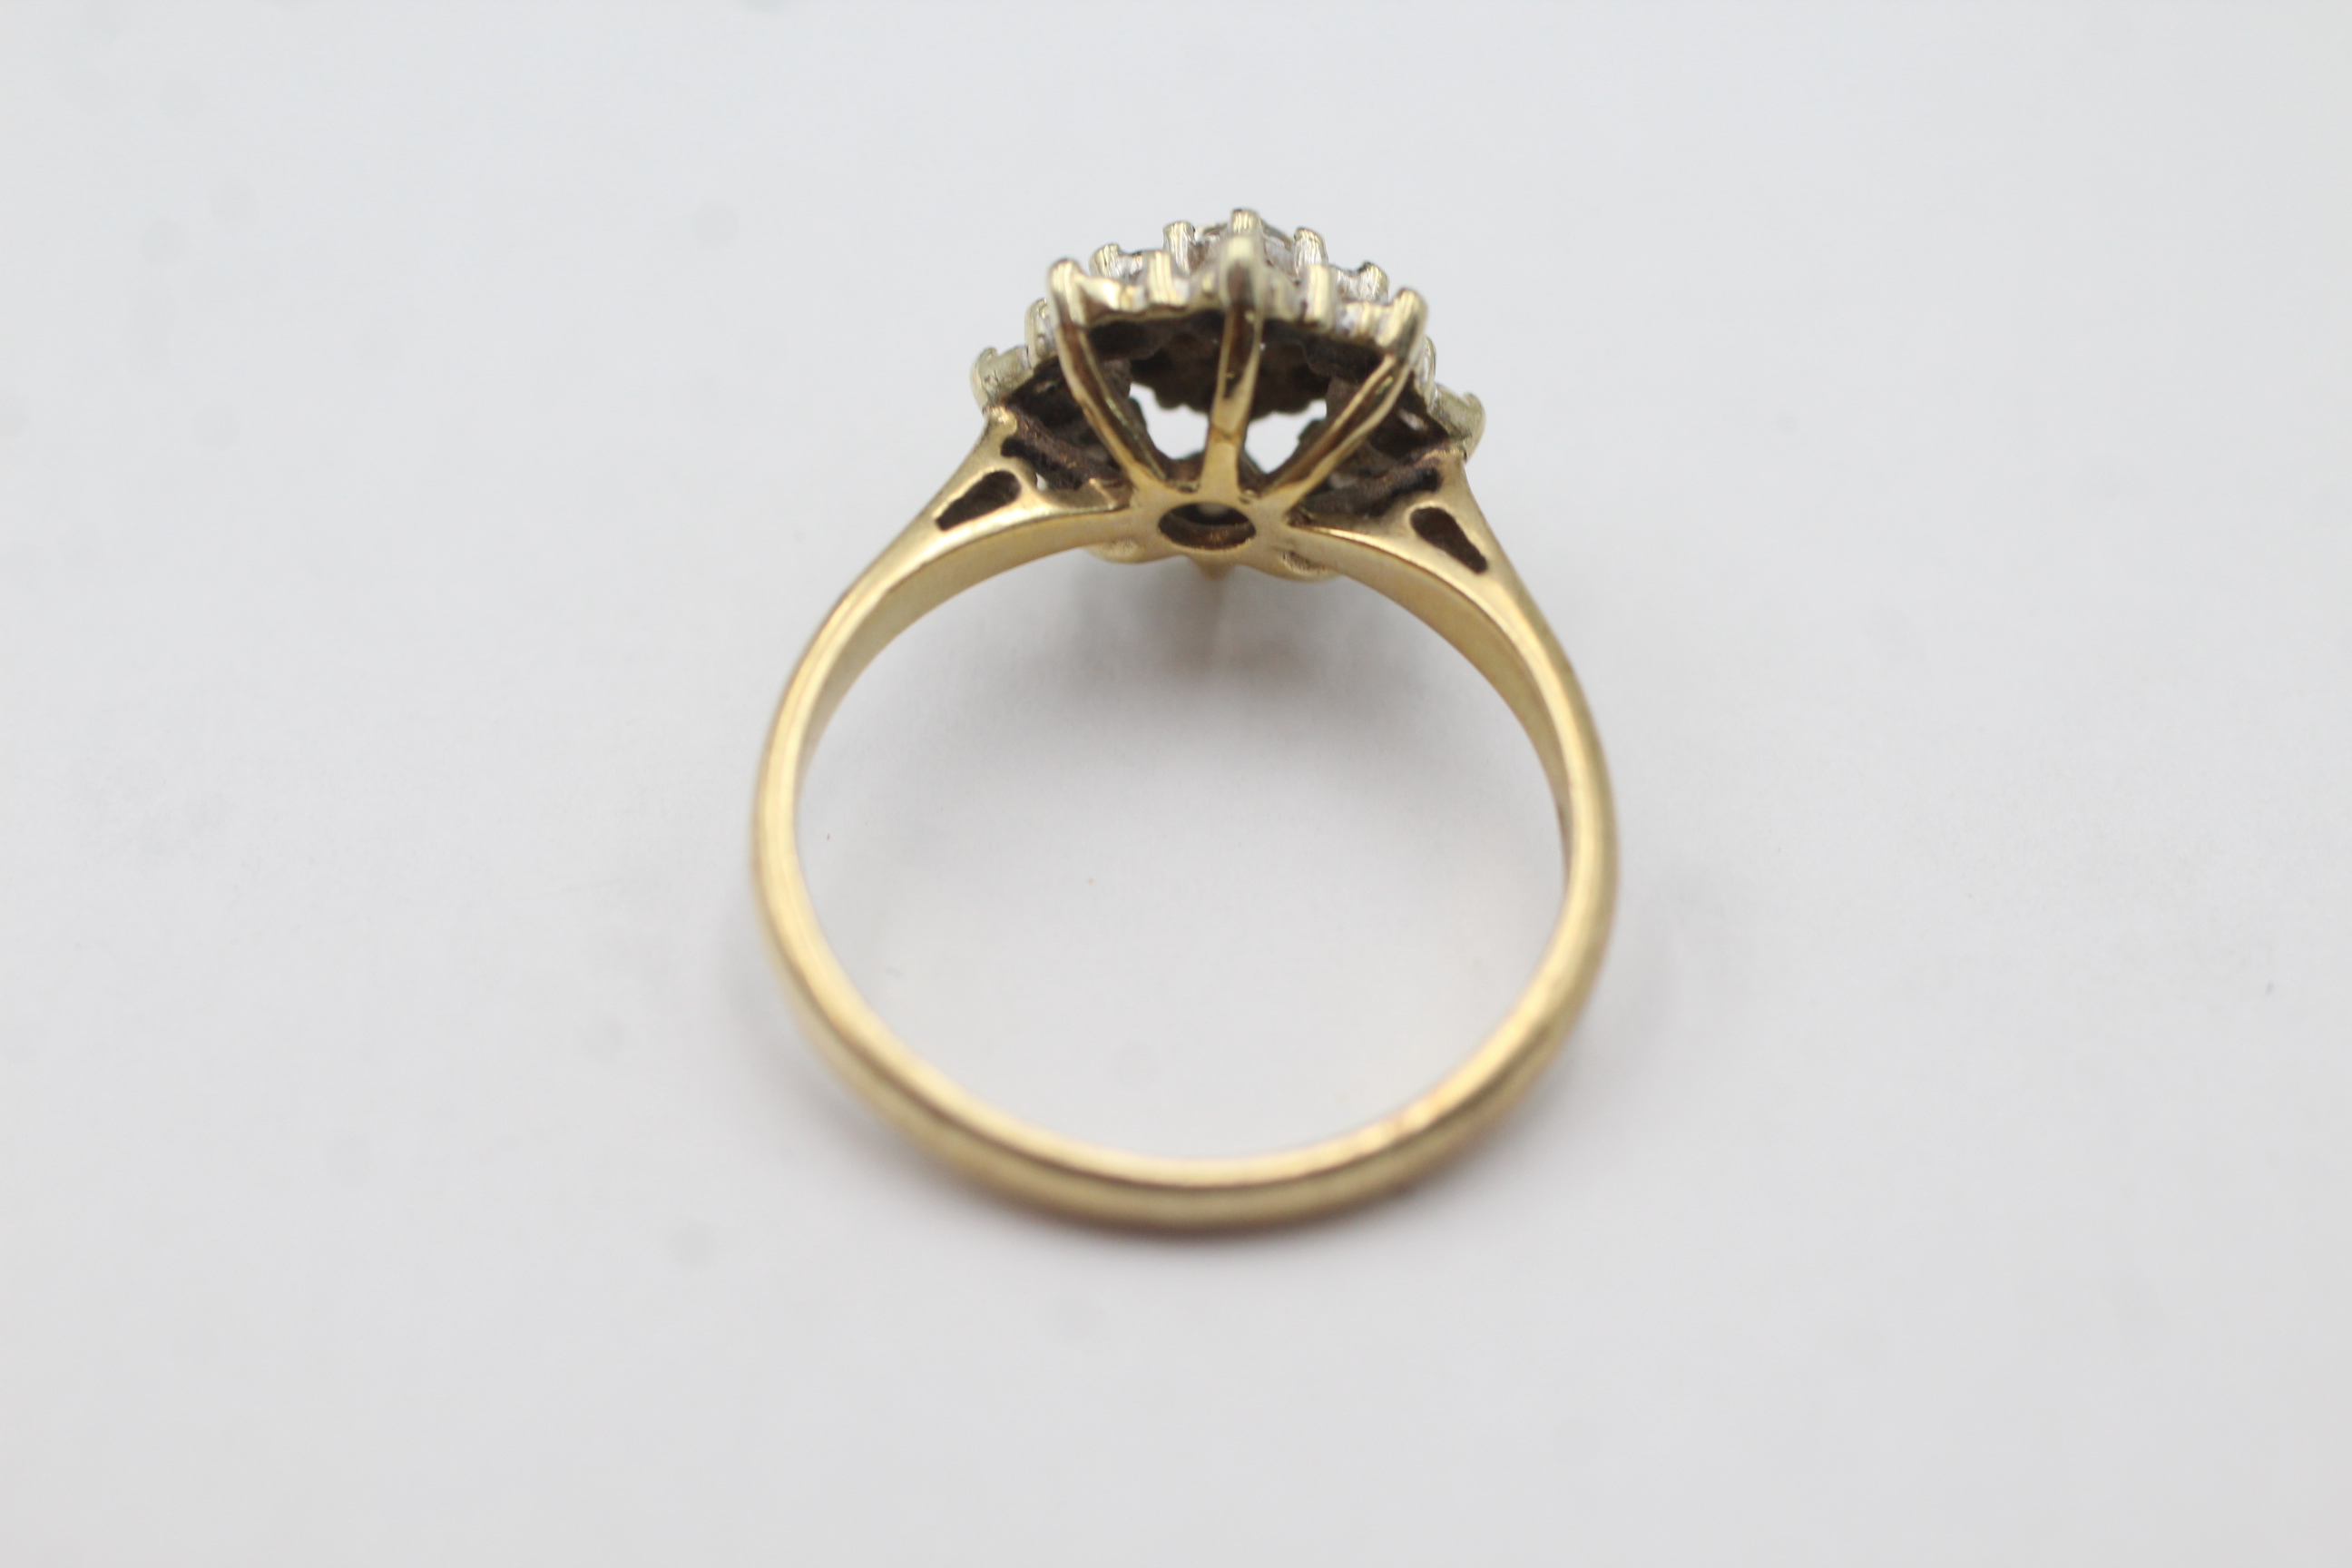 9ct gold diamond dress ring (3g) - Image 3 of 4